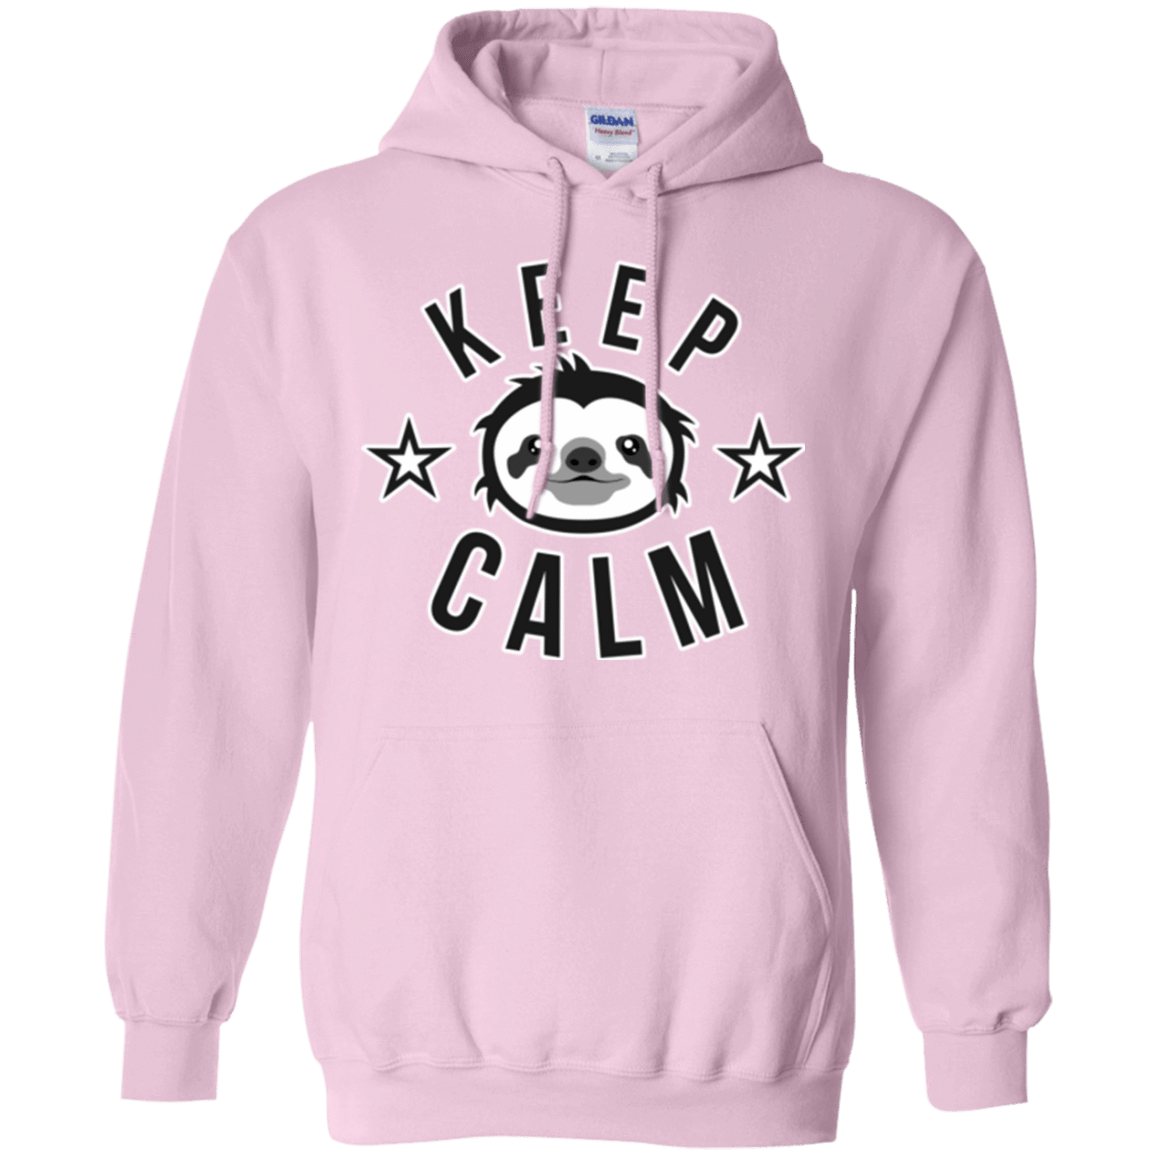 Sweatshirts Light Pink / Small Keep Calm Pullover Hoodie